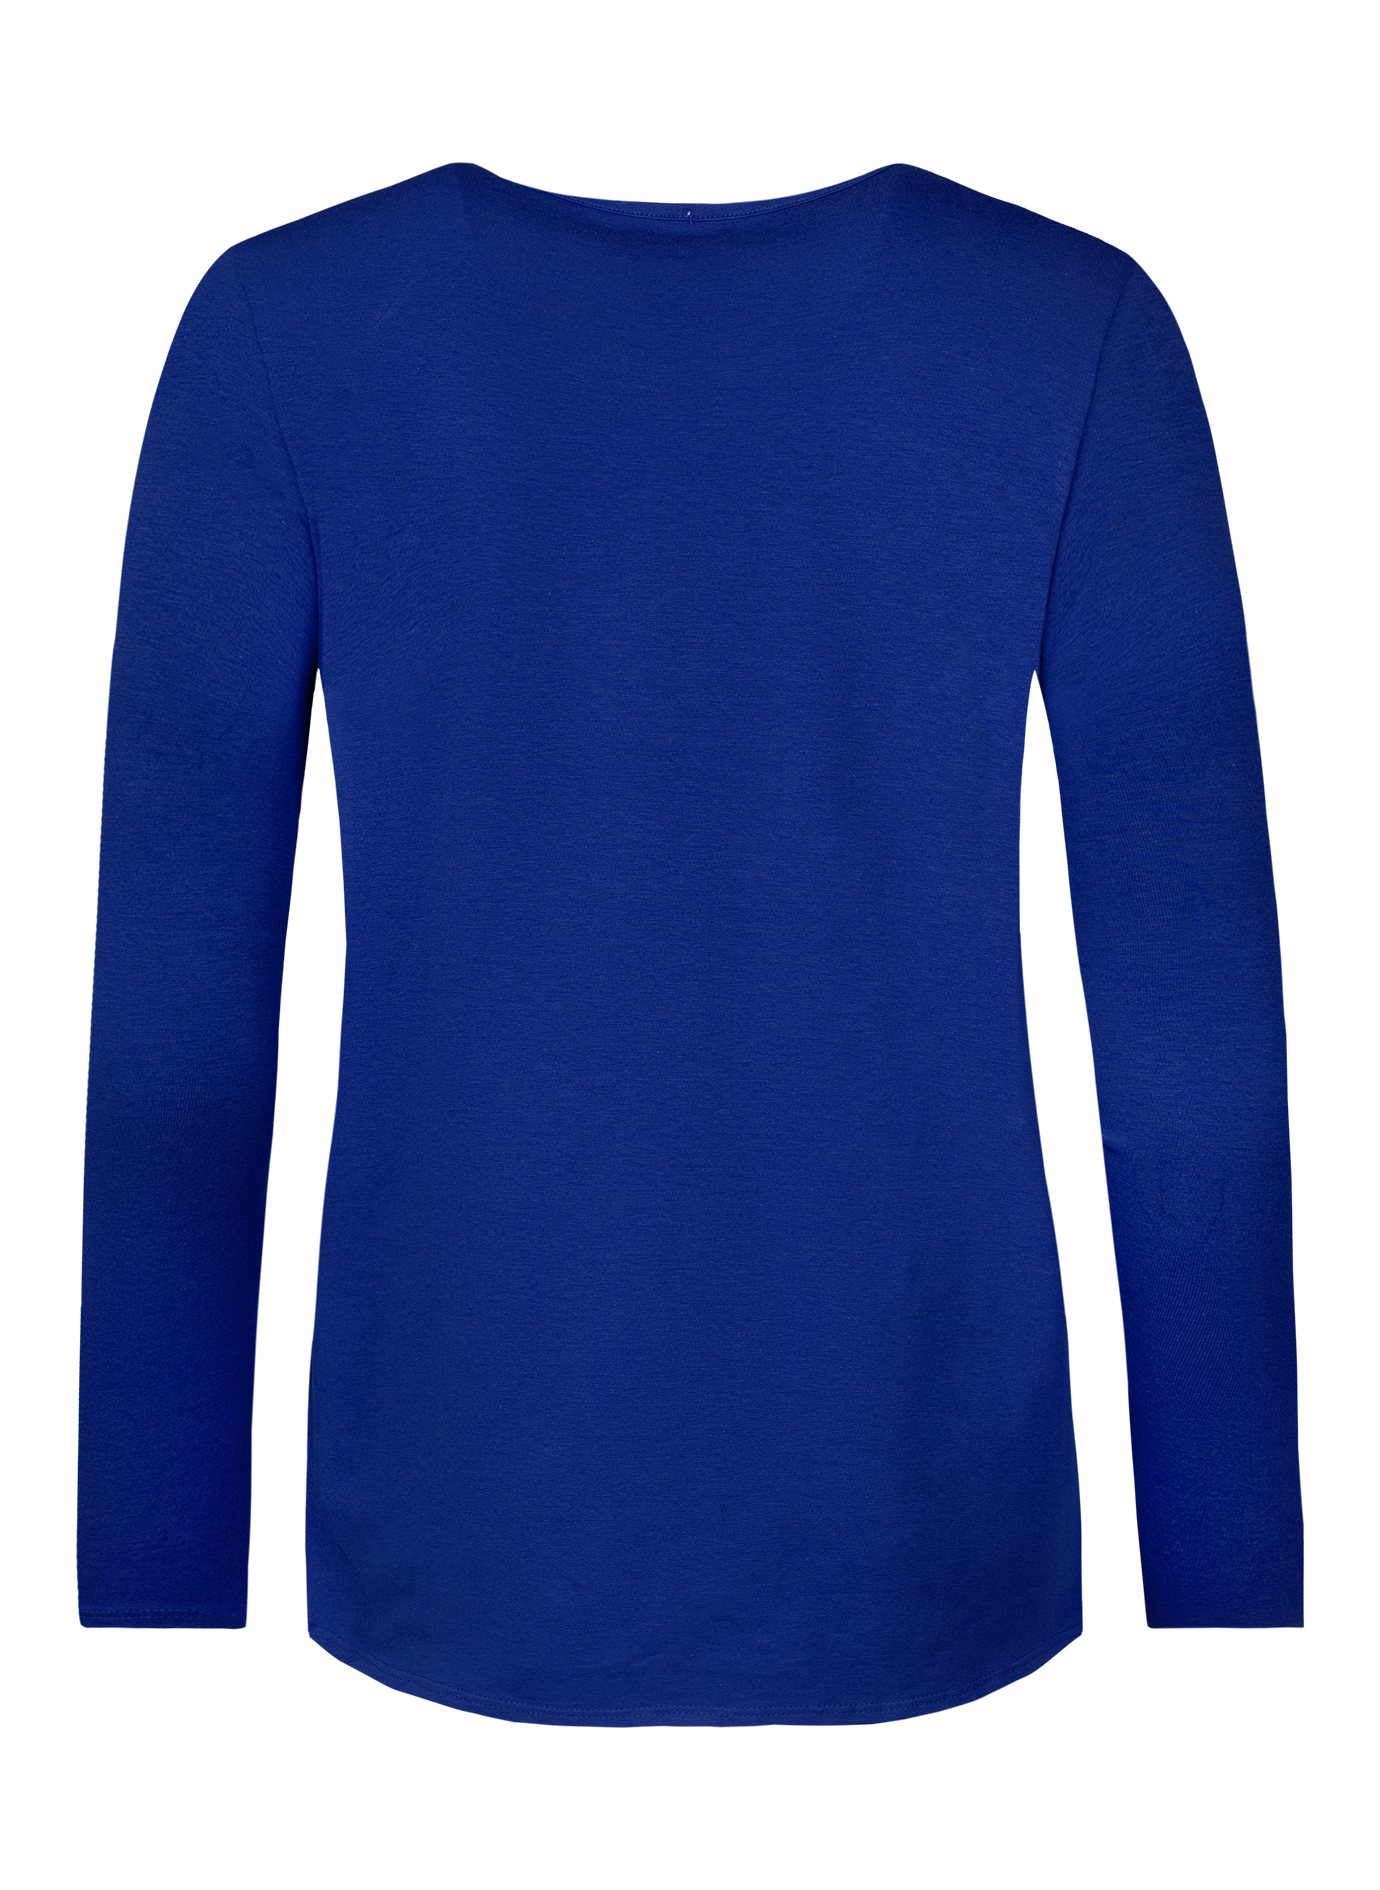 Damen-Langarmshirt Blau | XL | 4060972811024